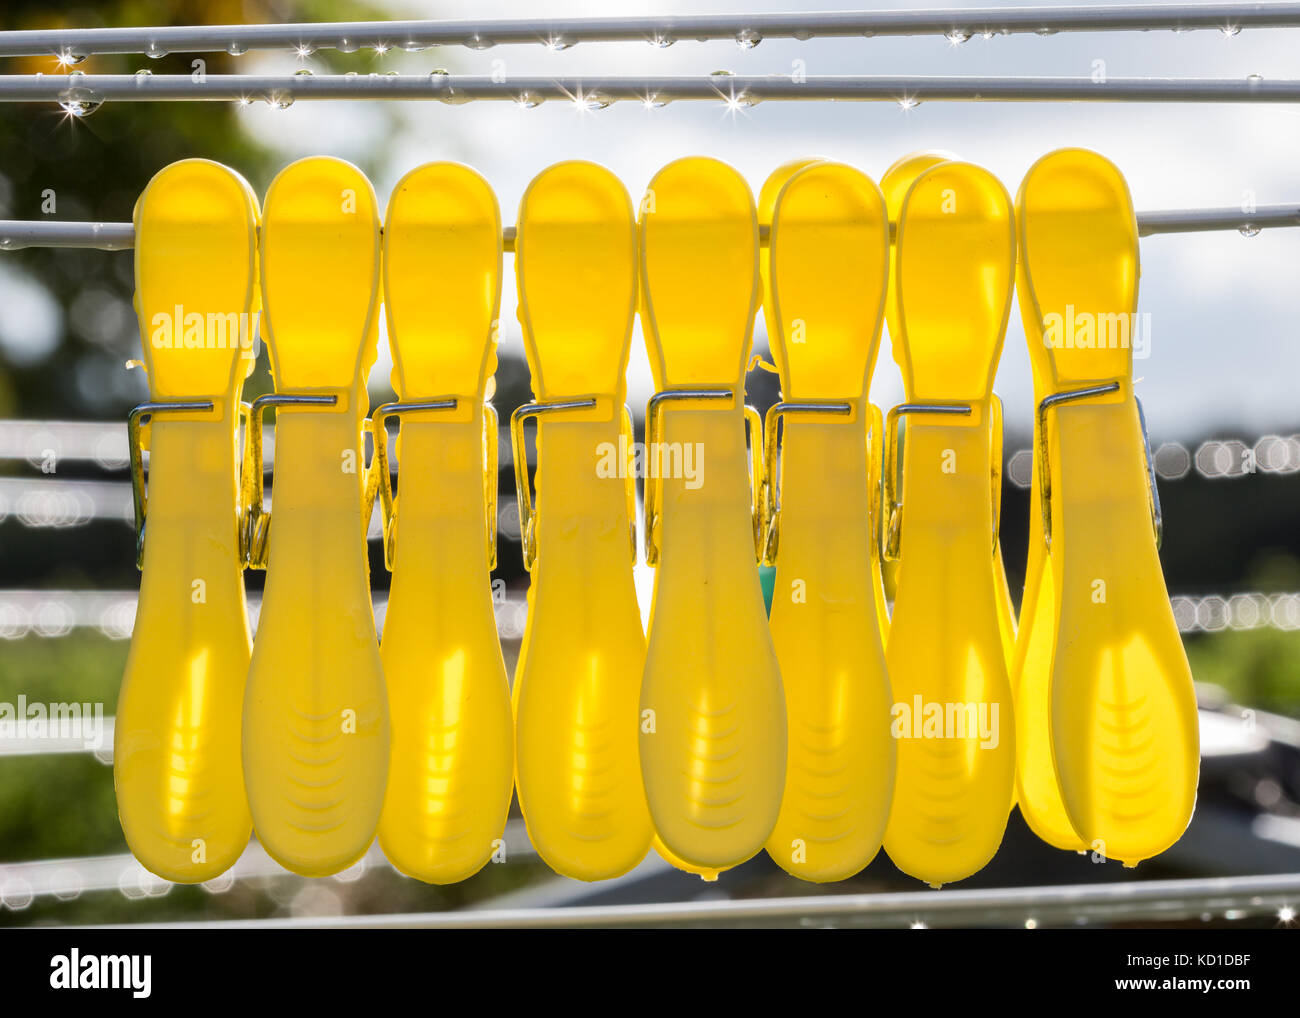 yellow pegs on washing line with rain drips Stock Photo